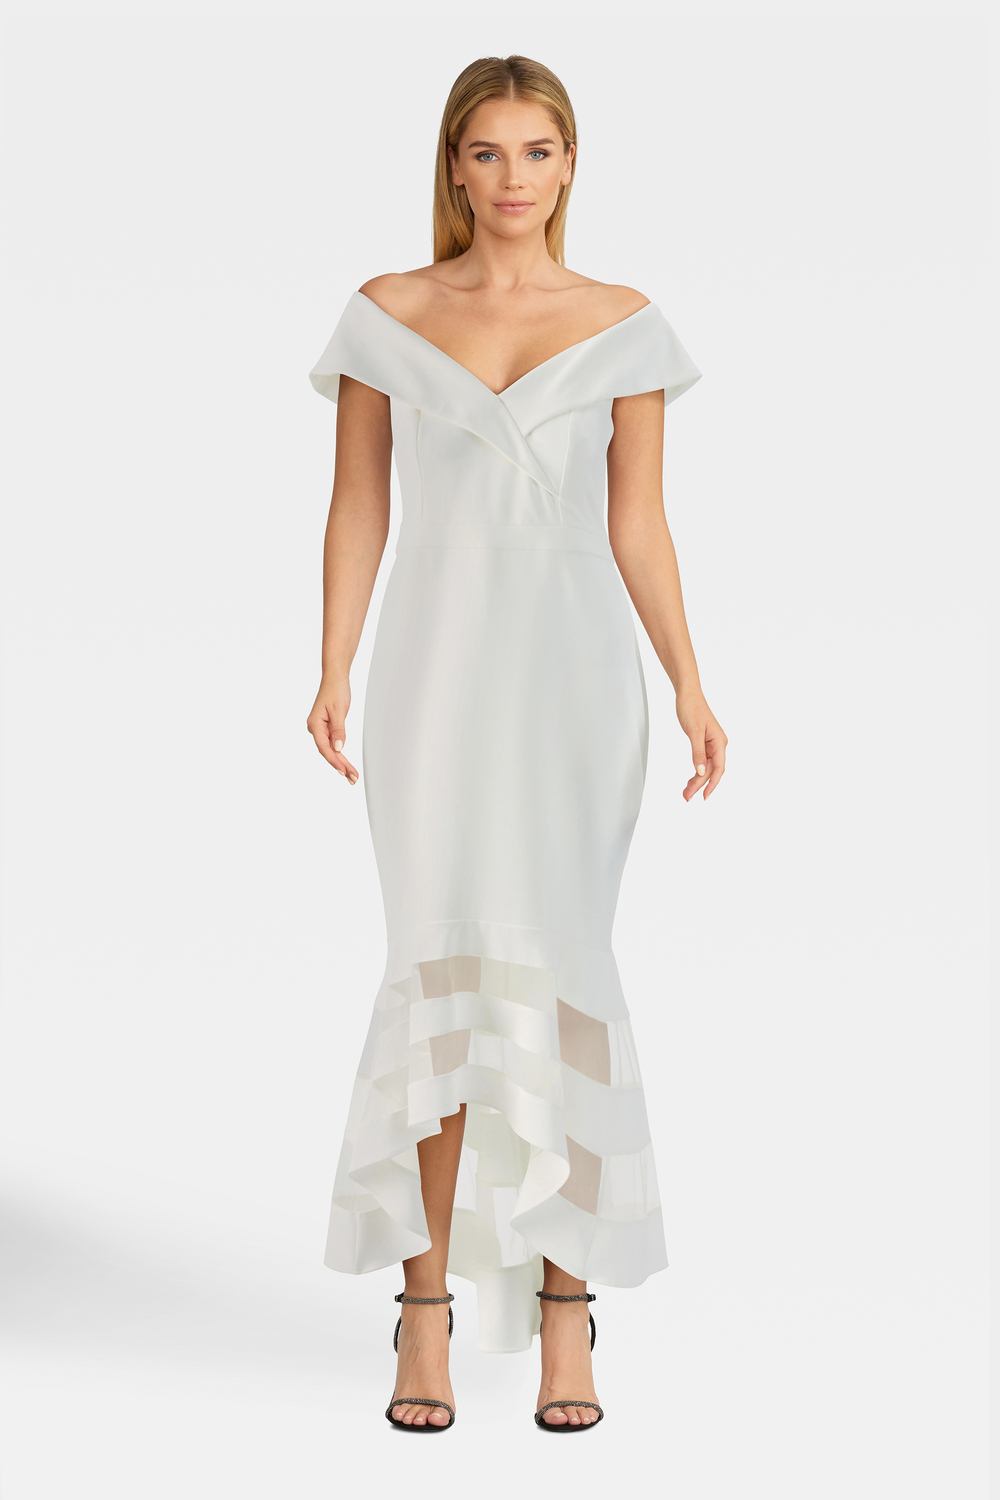 Drop Shoulder Dual Fabric Dress Style 223743. Vanilla 30